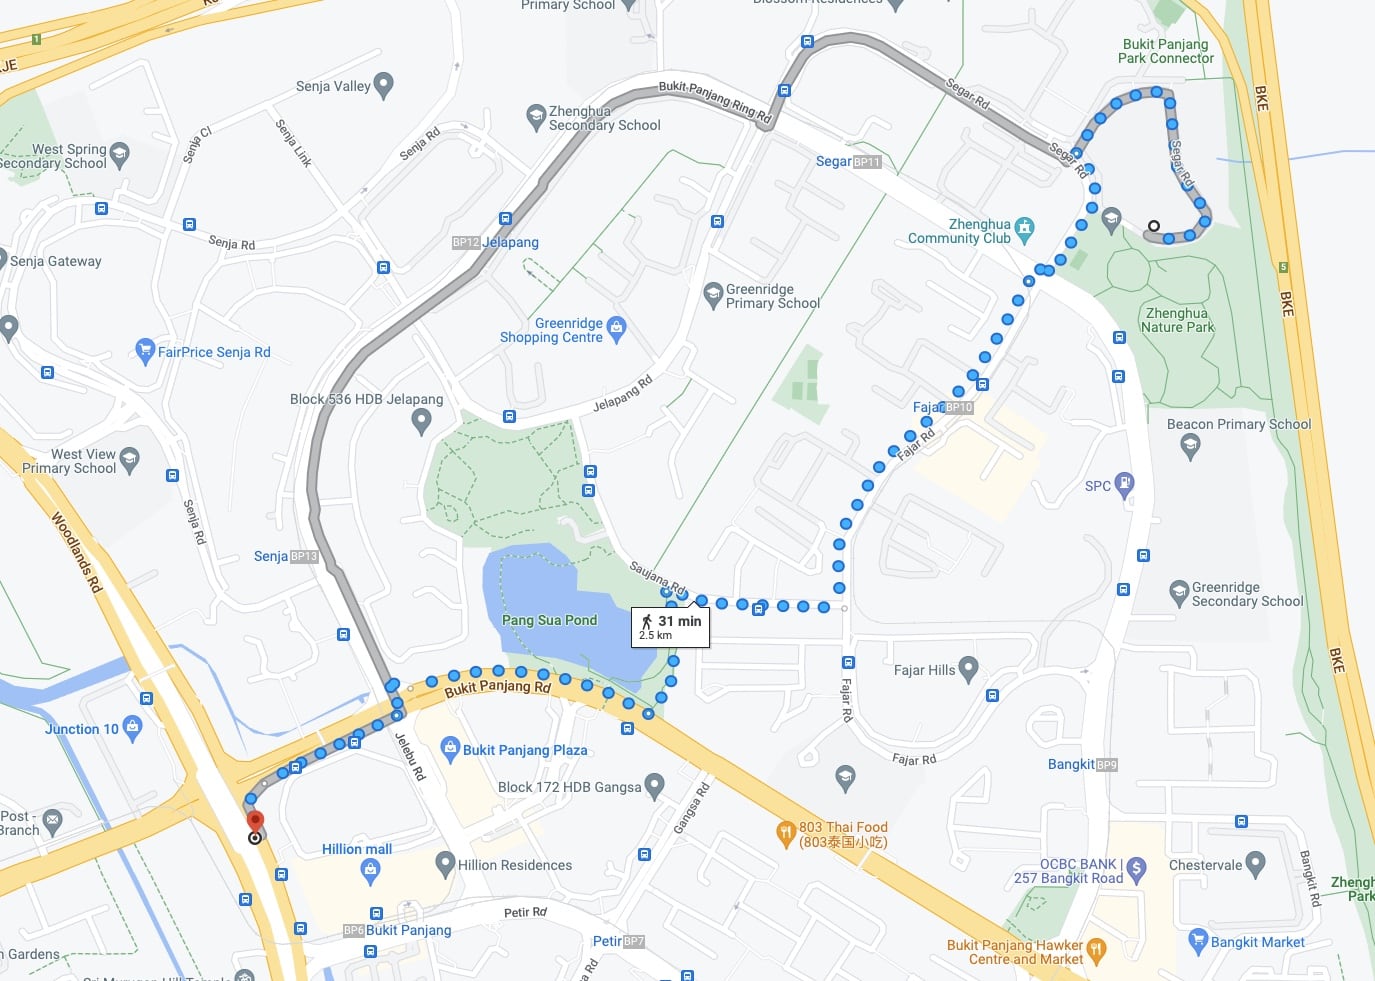 segar road walk to mrt google maps